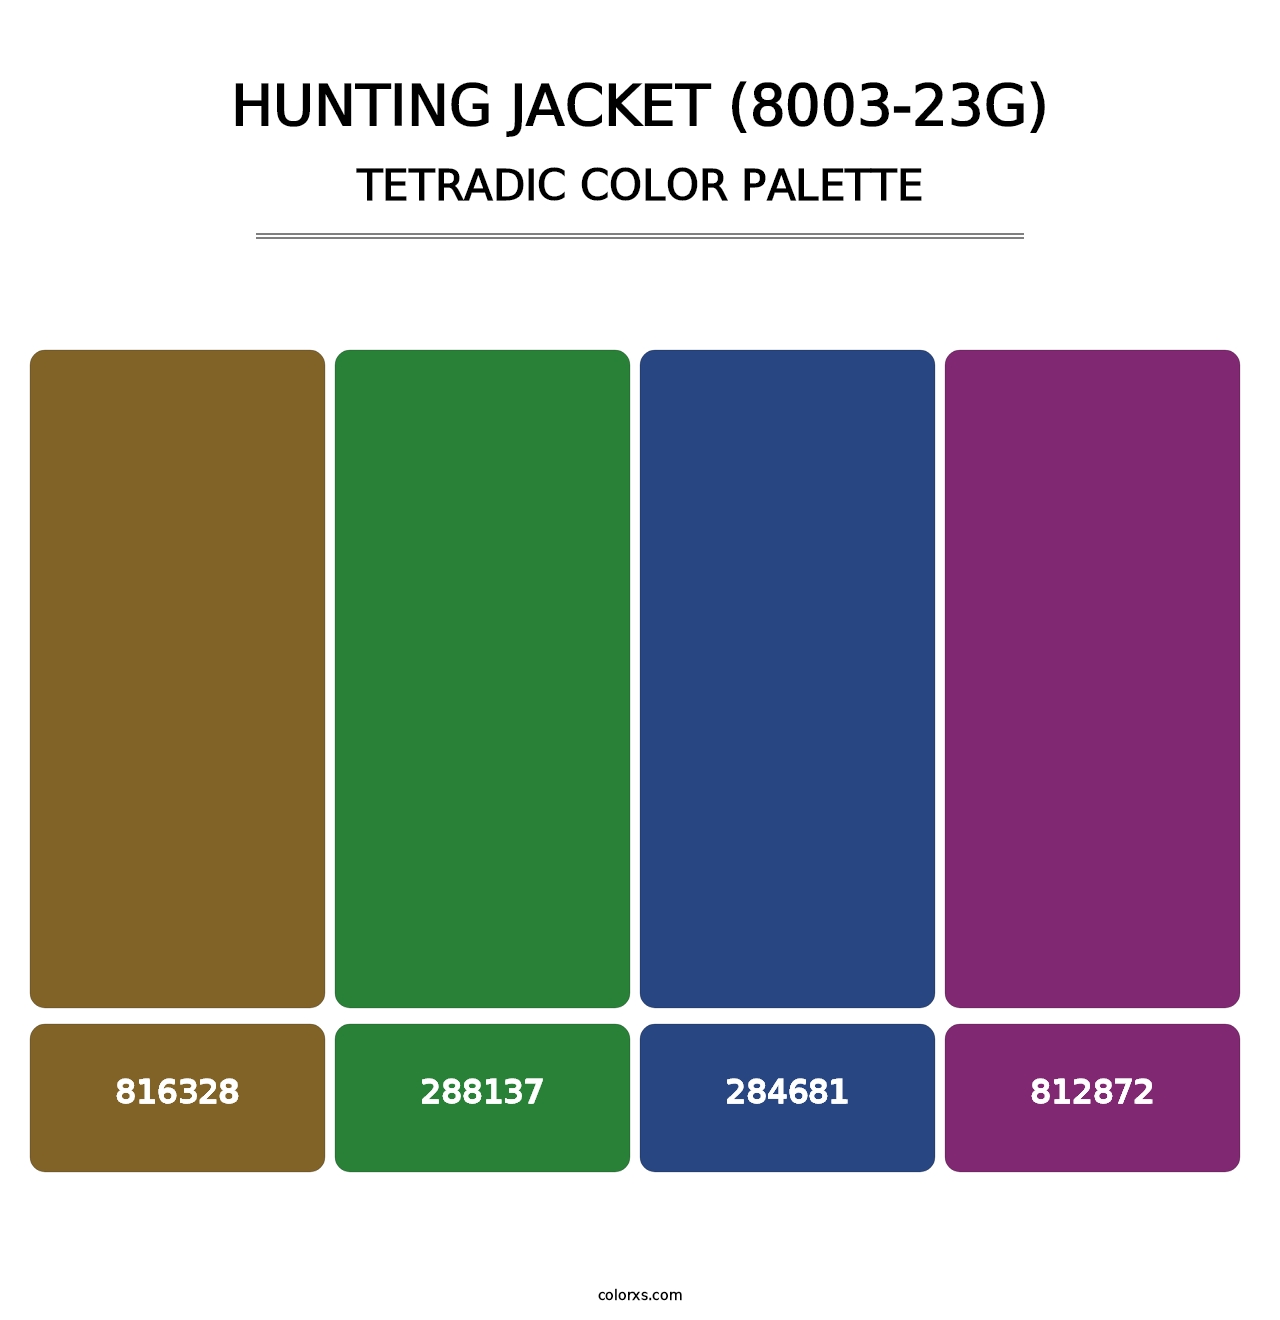 Hunting Jacket (8003-23G) - Tetradic Color Palette